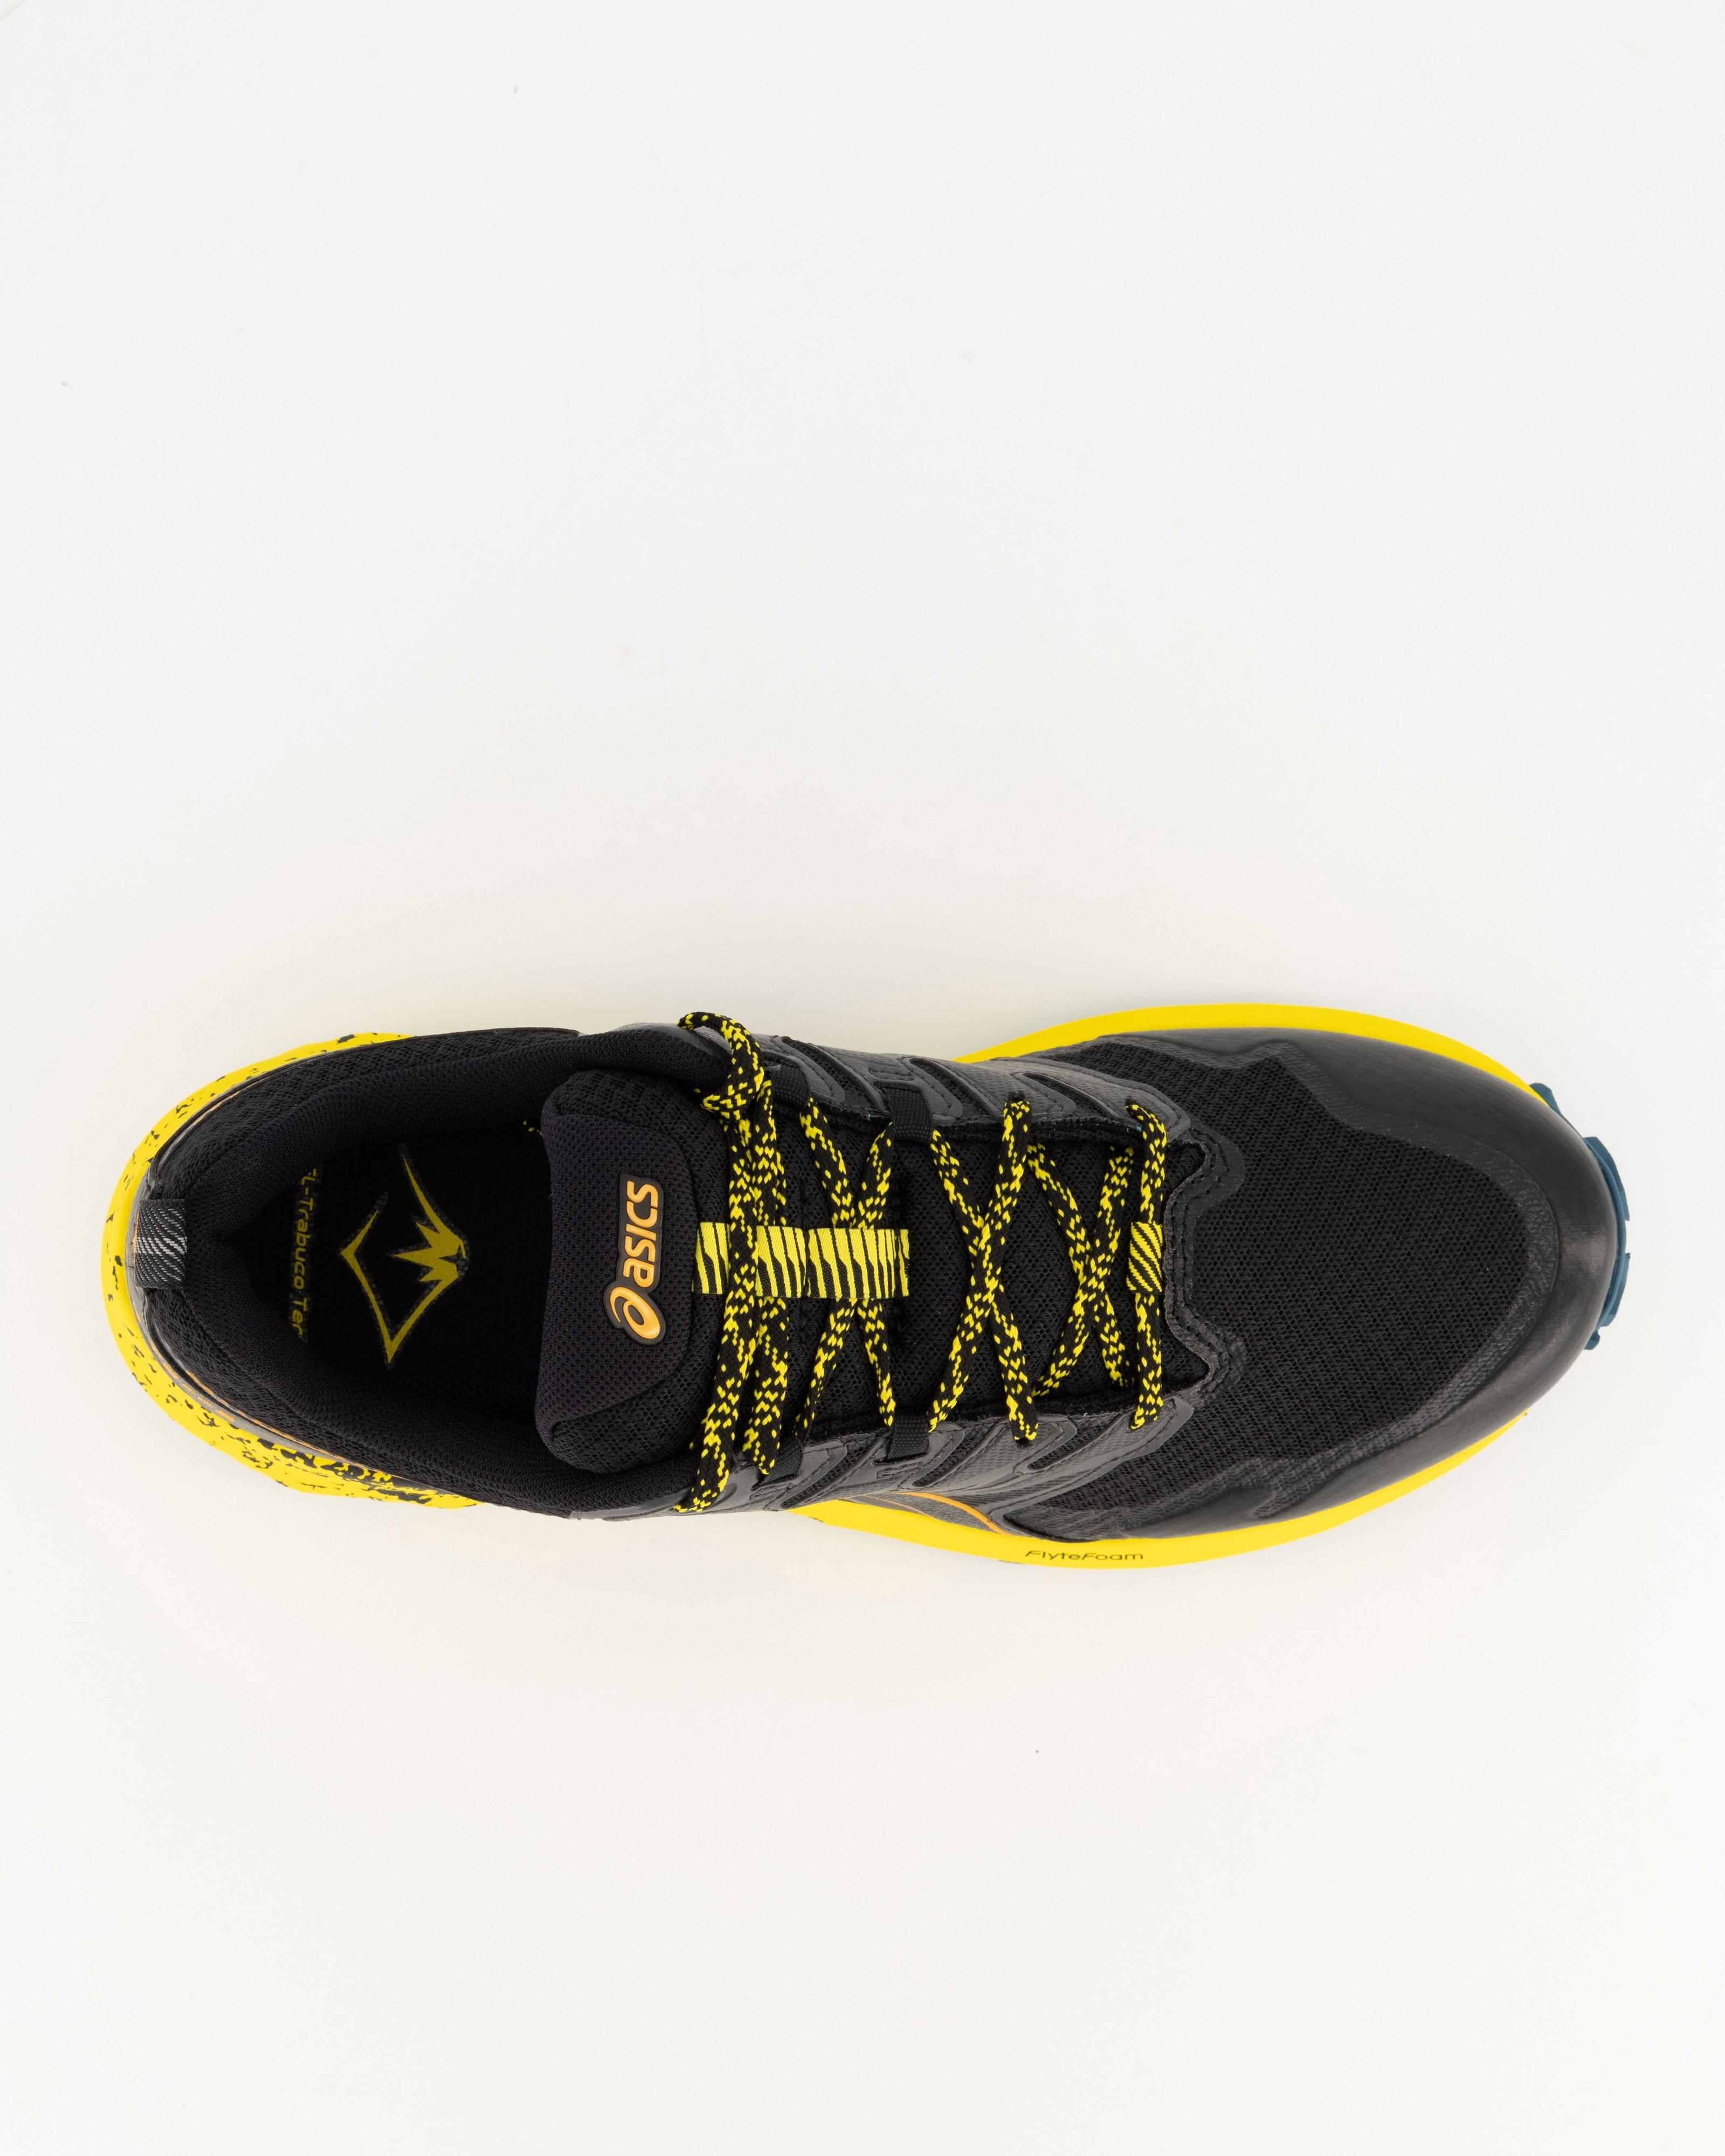 ASICS Gel-Venture 9 Mid-Top Running Shoes